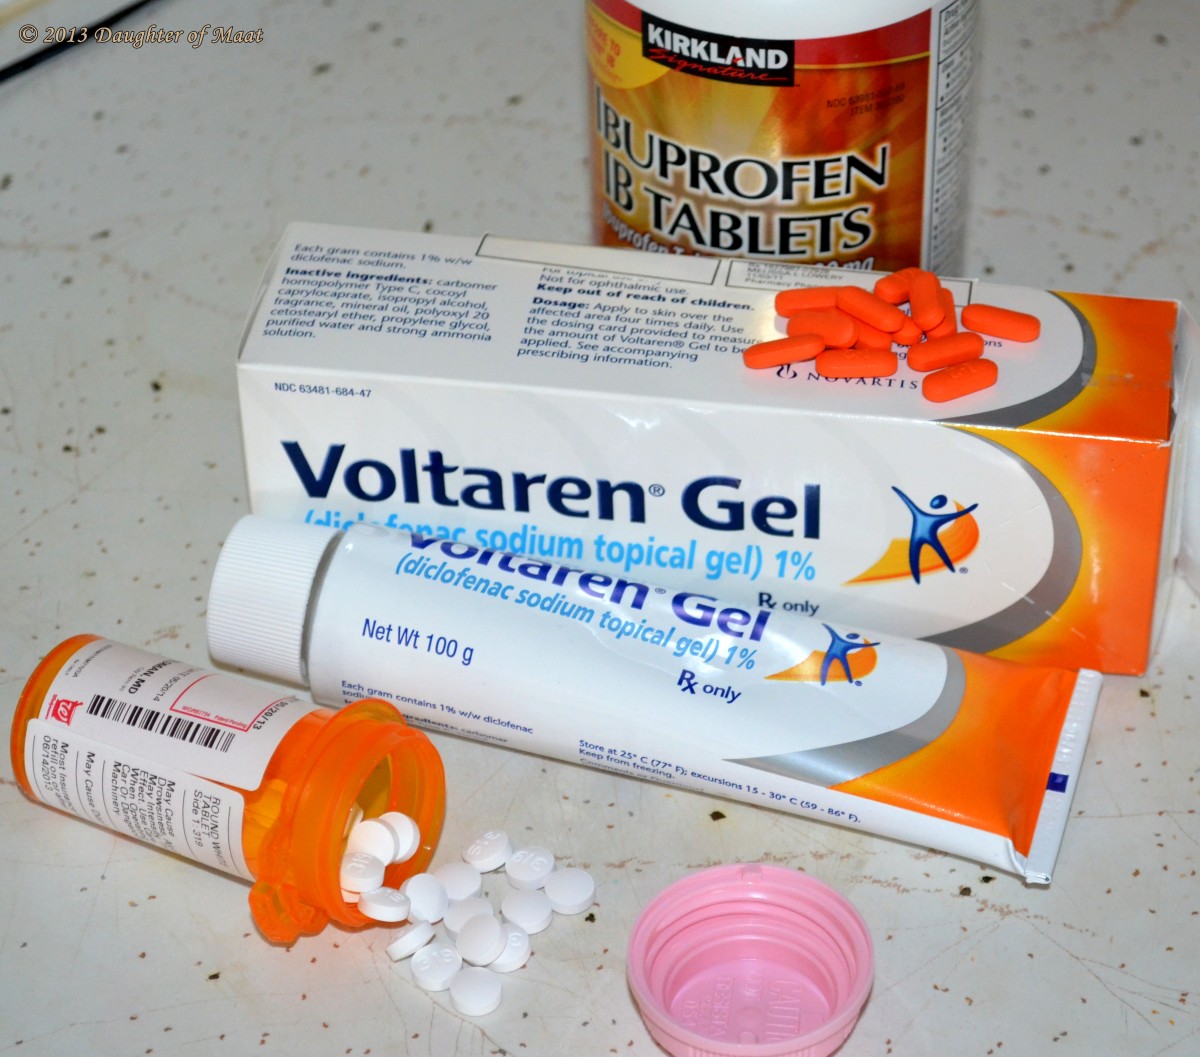 Ibuprofen, Voltaren Gel and Ultram 50 mg